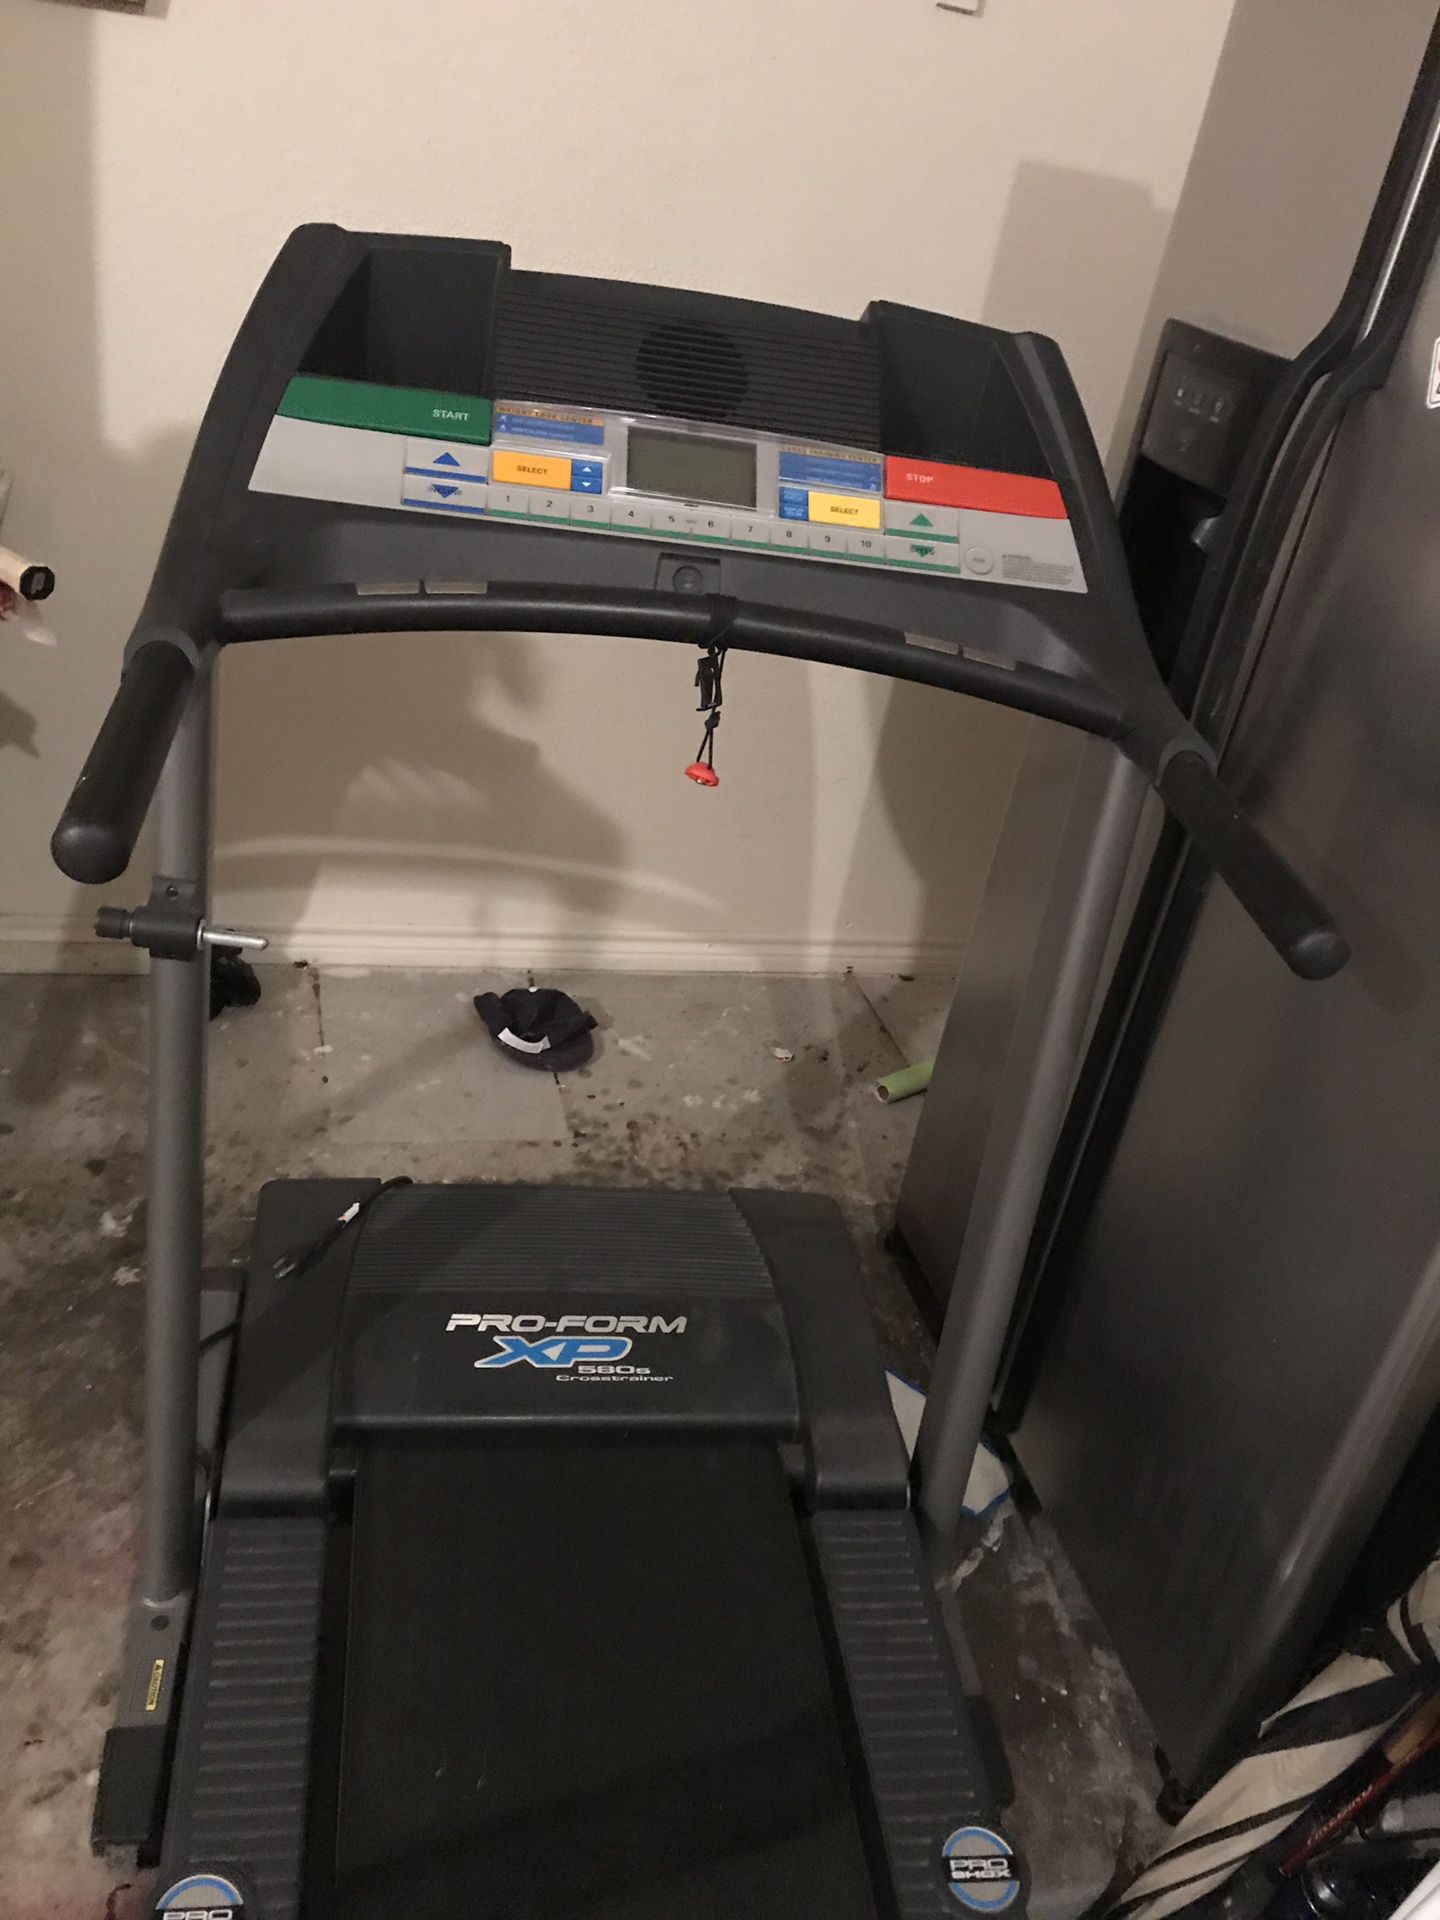 Pro-form XP Treadmill. Excellent condition!